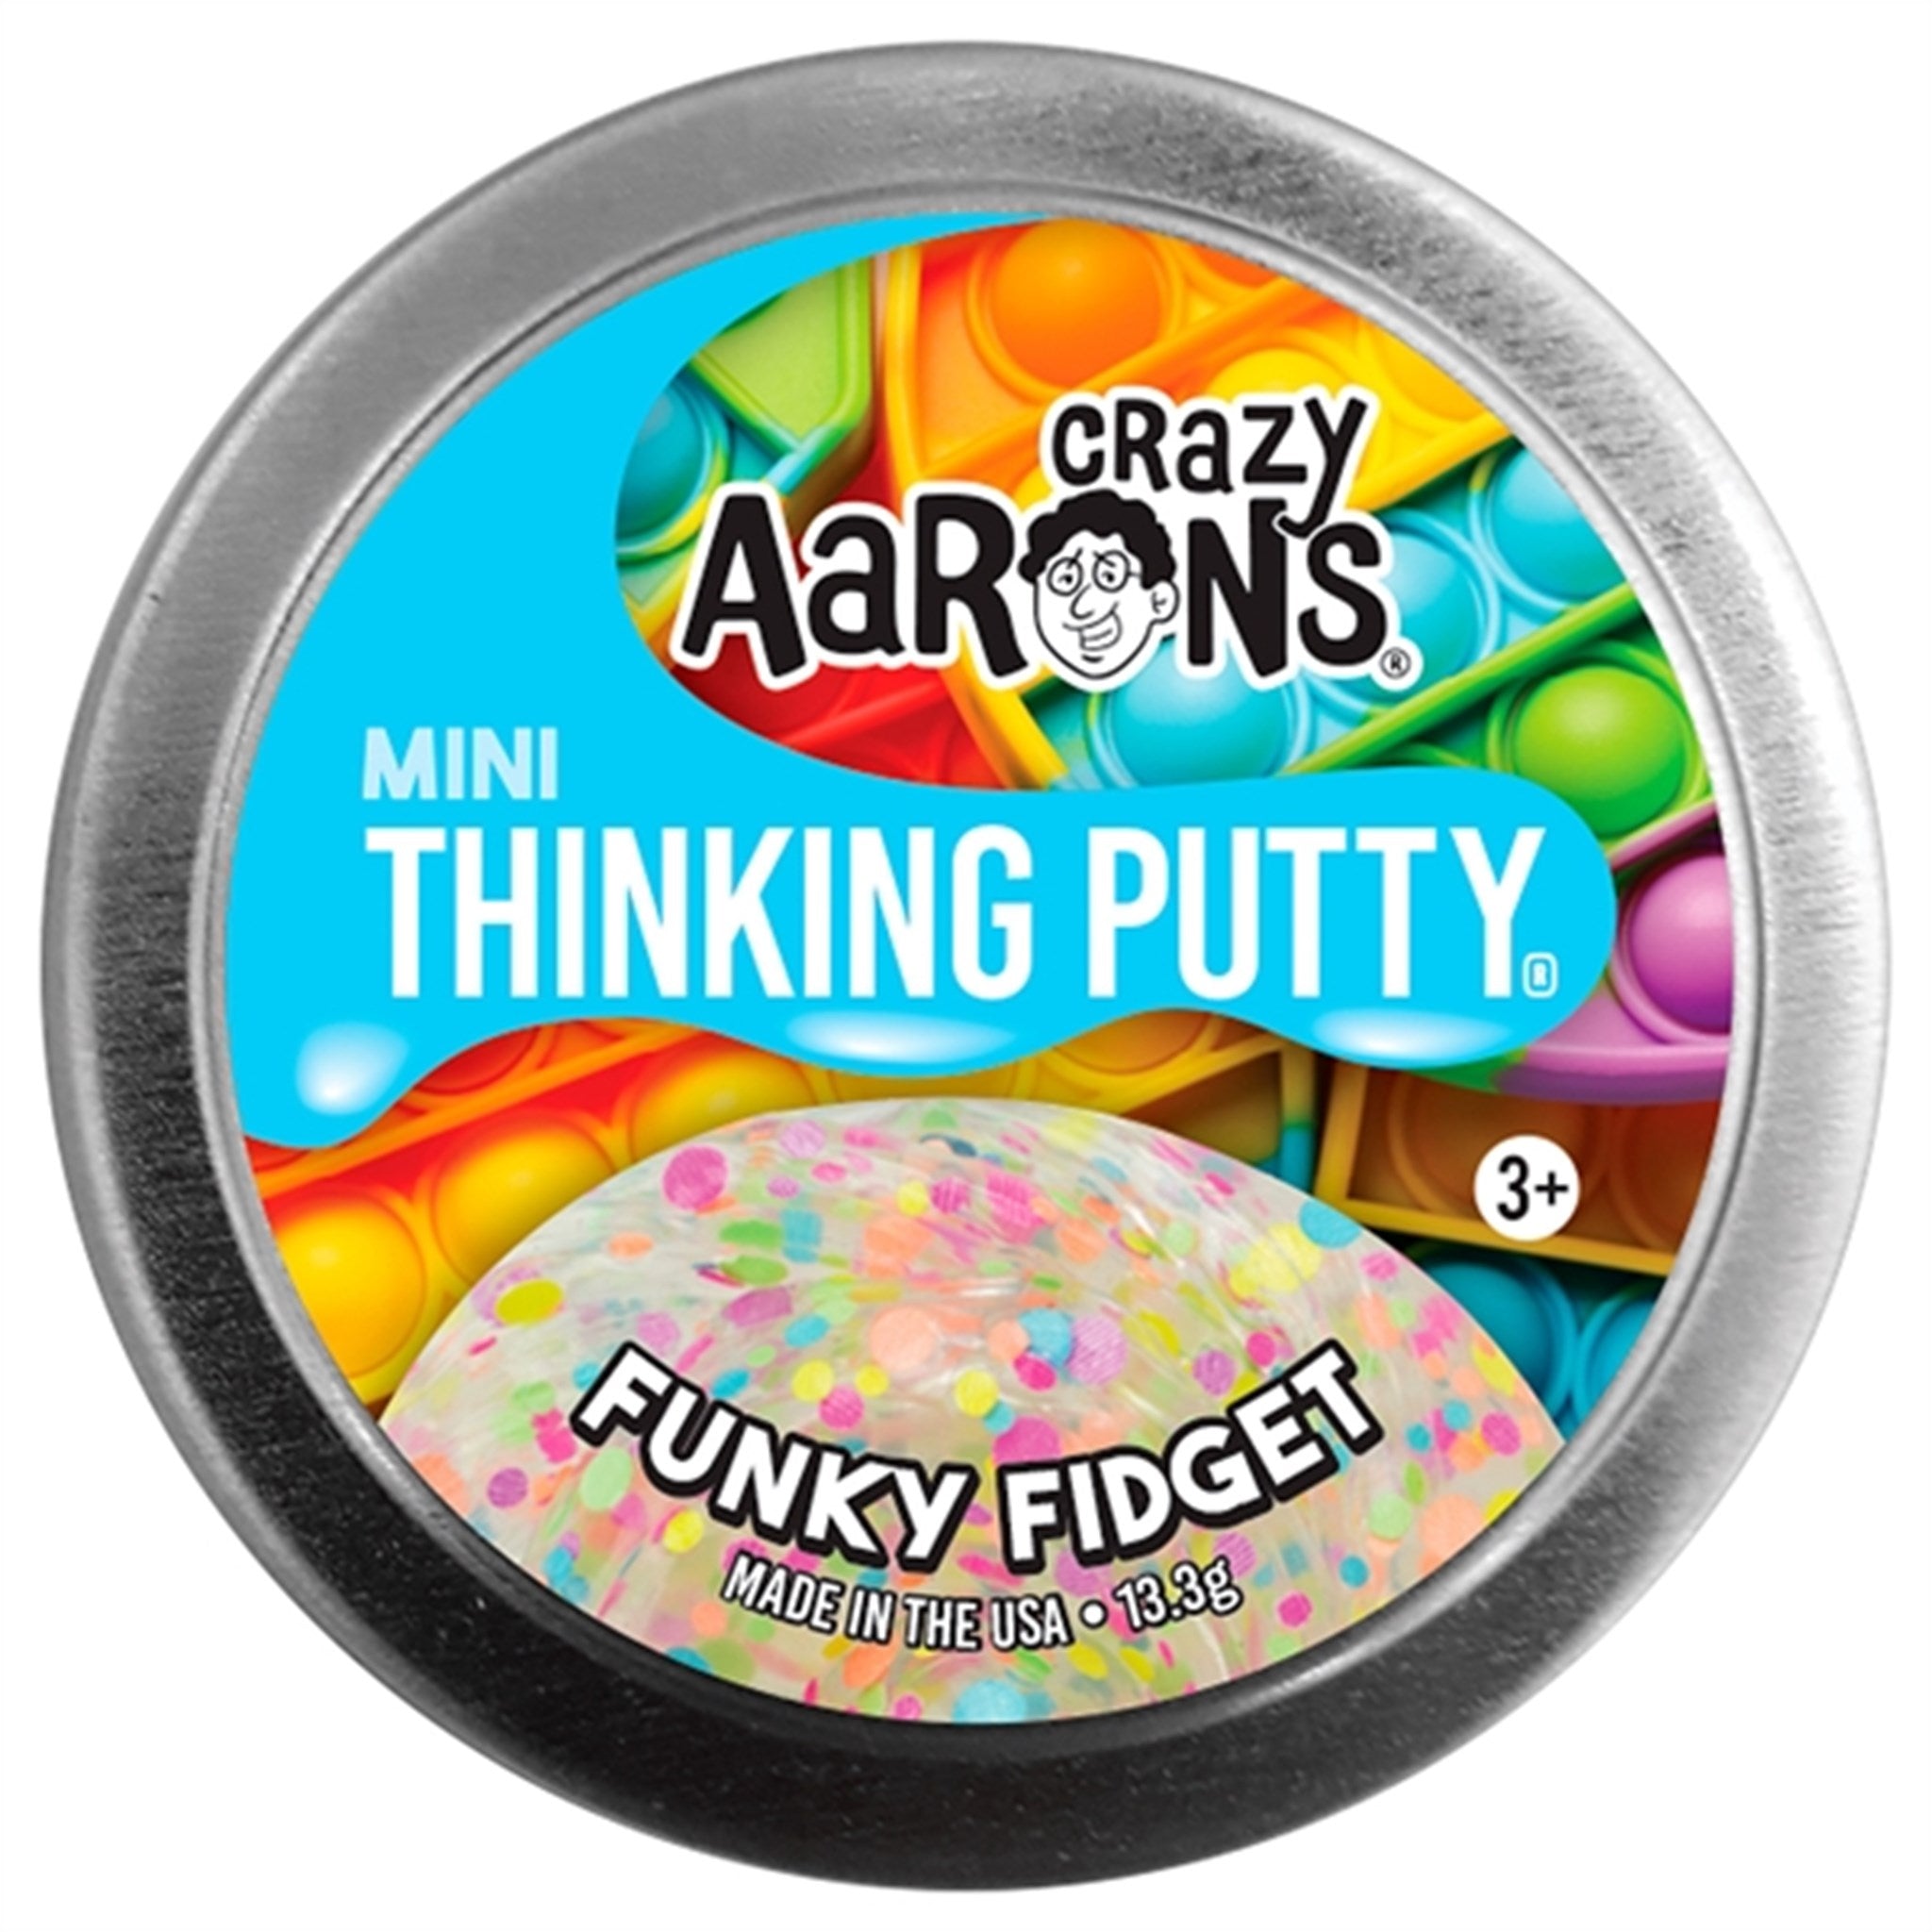 Crazy Aaron's® Slim - Thinking Putty Mini Tins - Funky Fidget